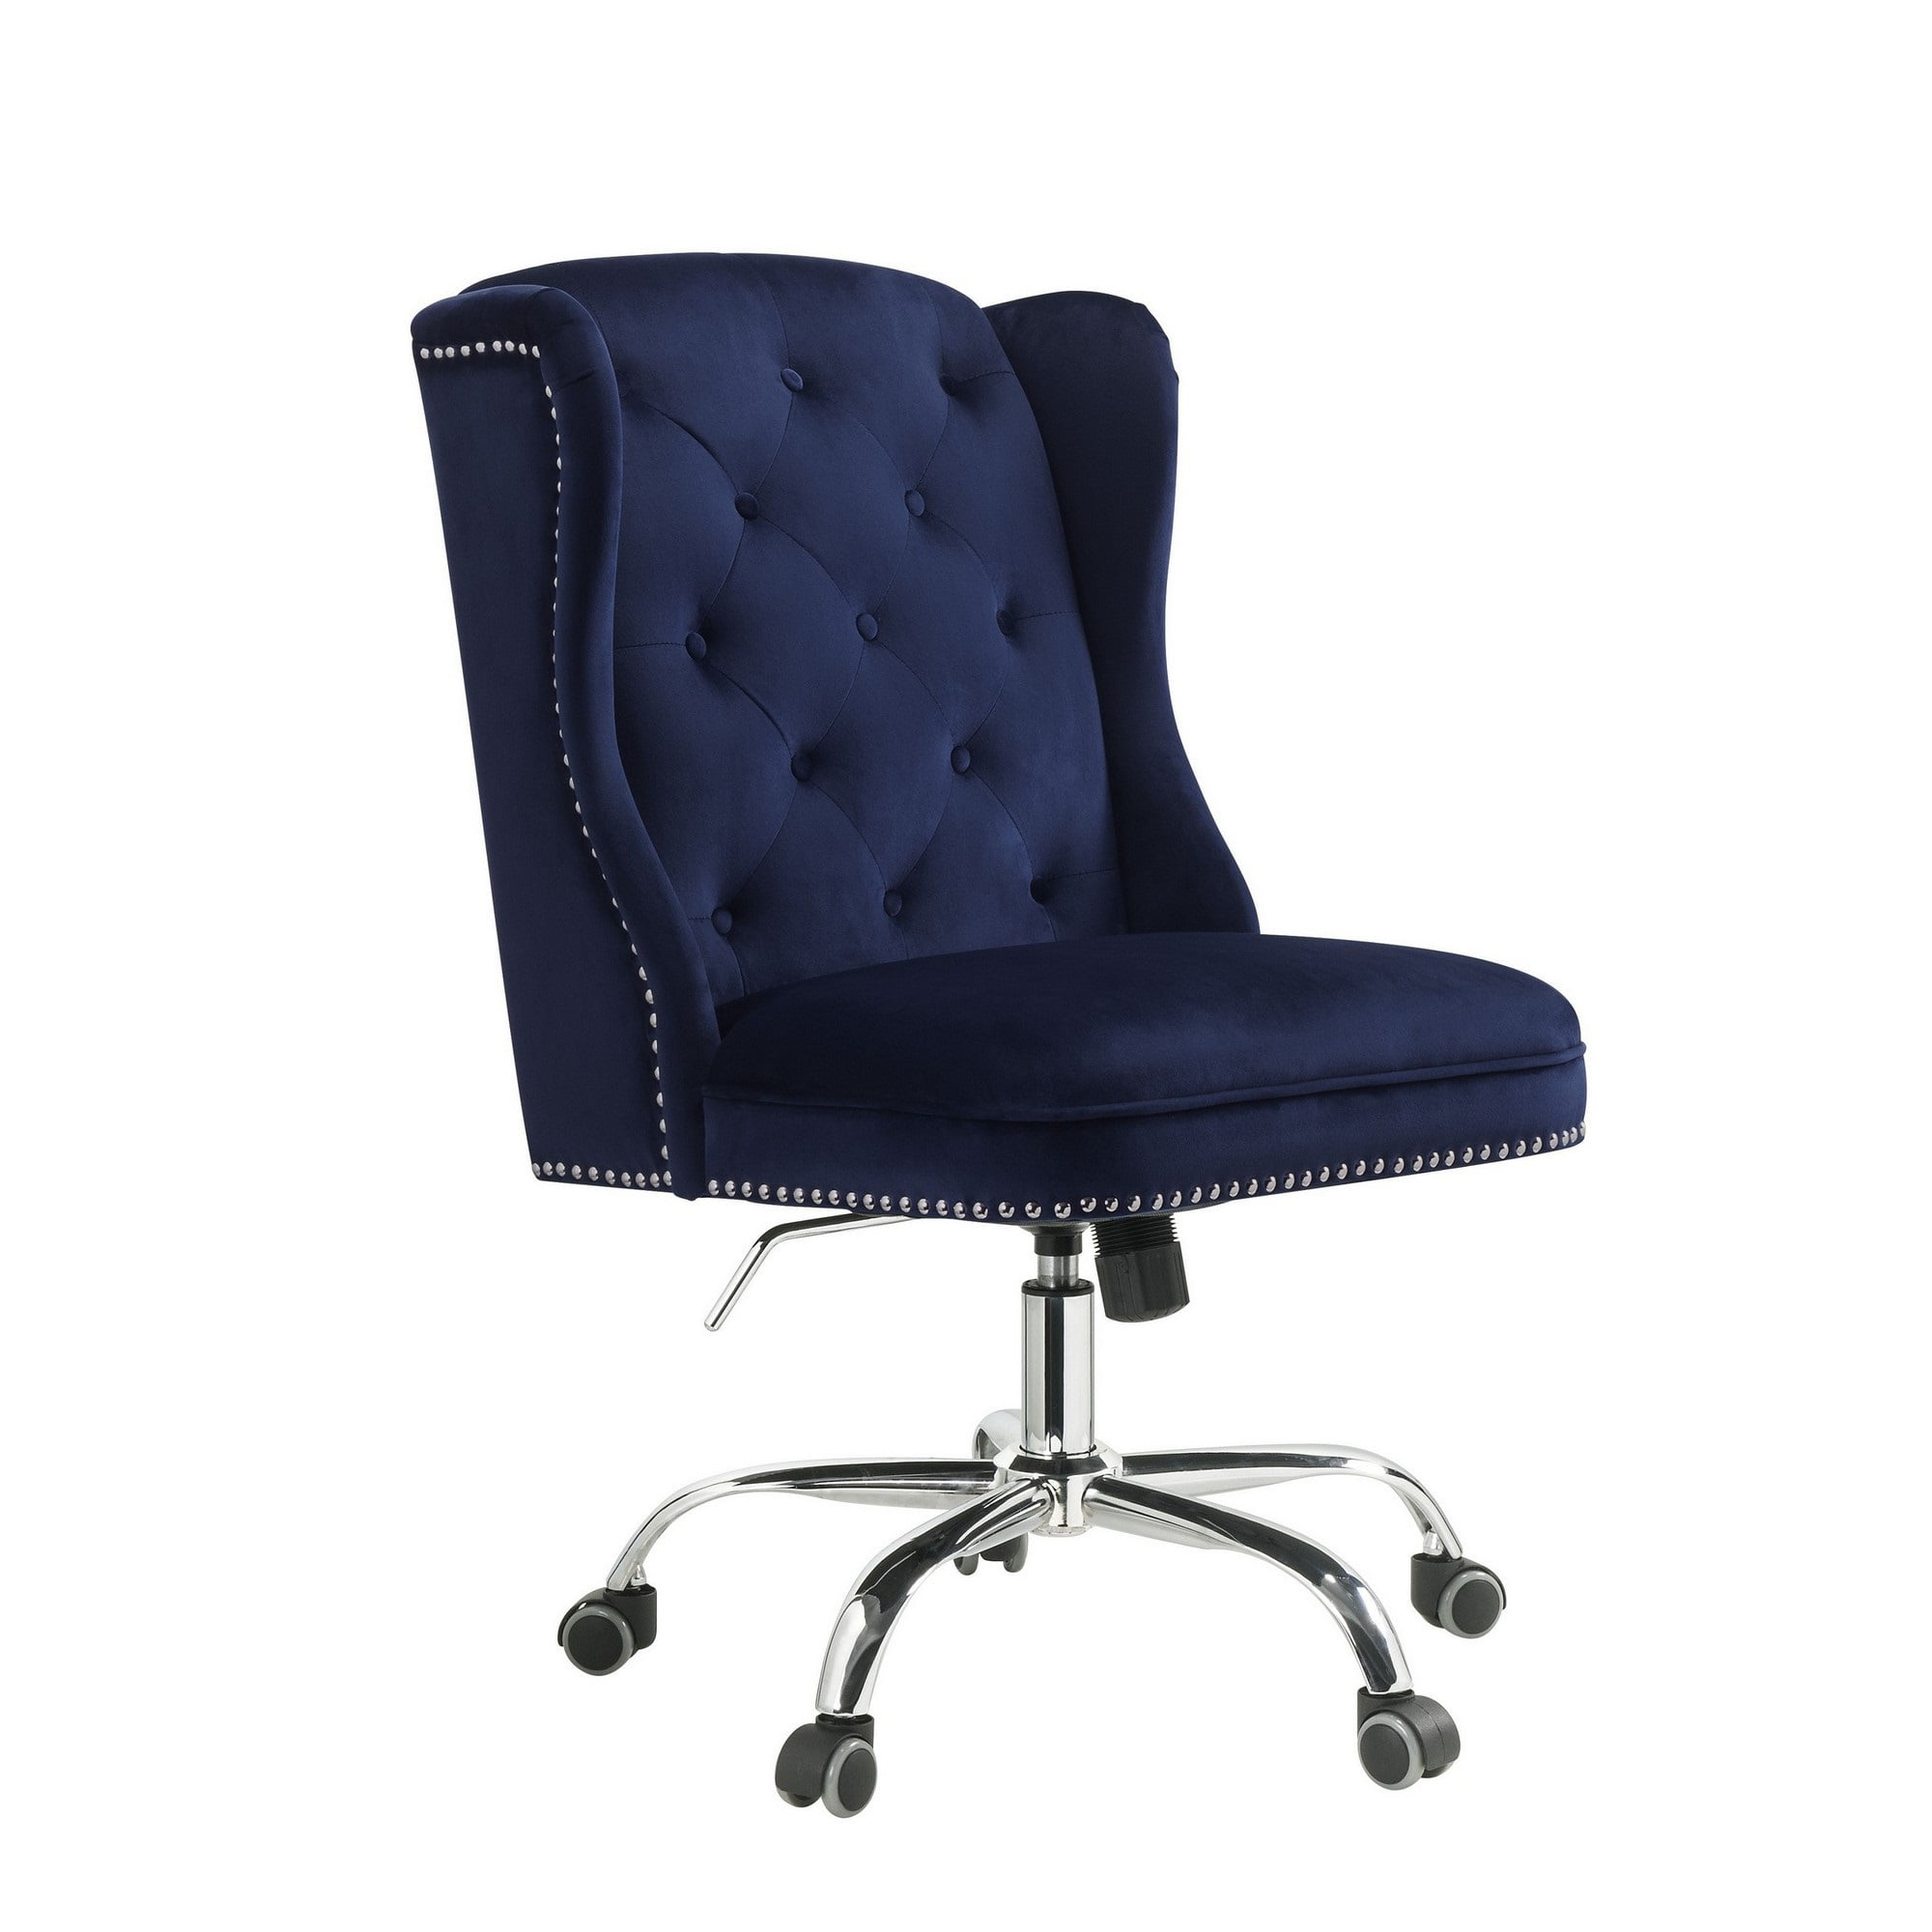 Velvet Upholstered Armless Swivel and Adjustable Tufted Office Chair